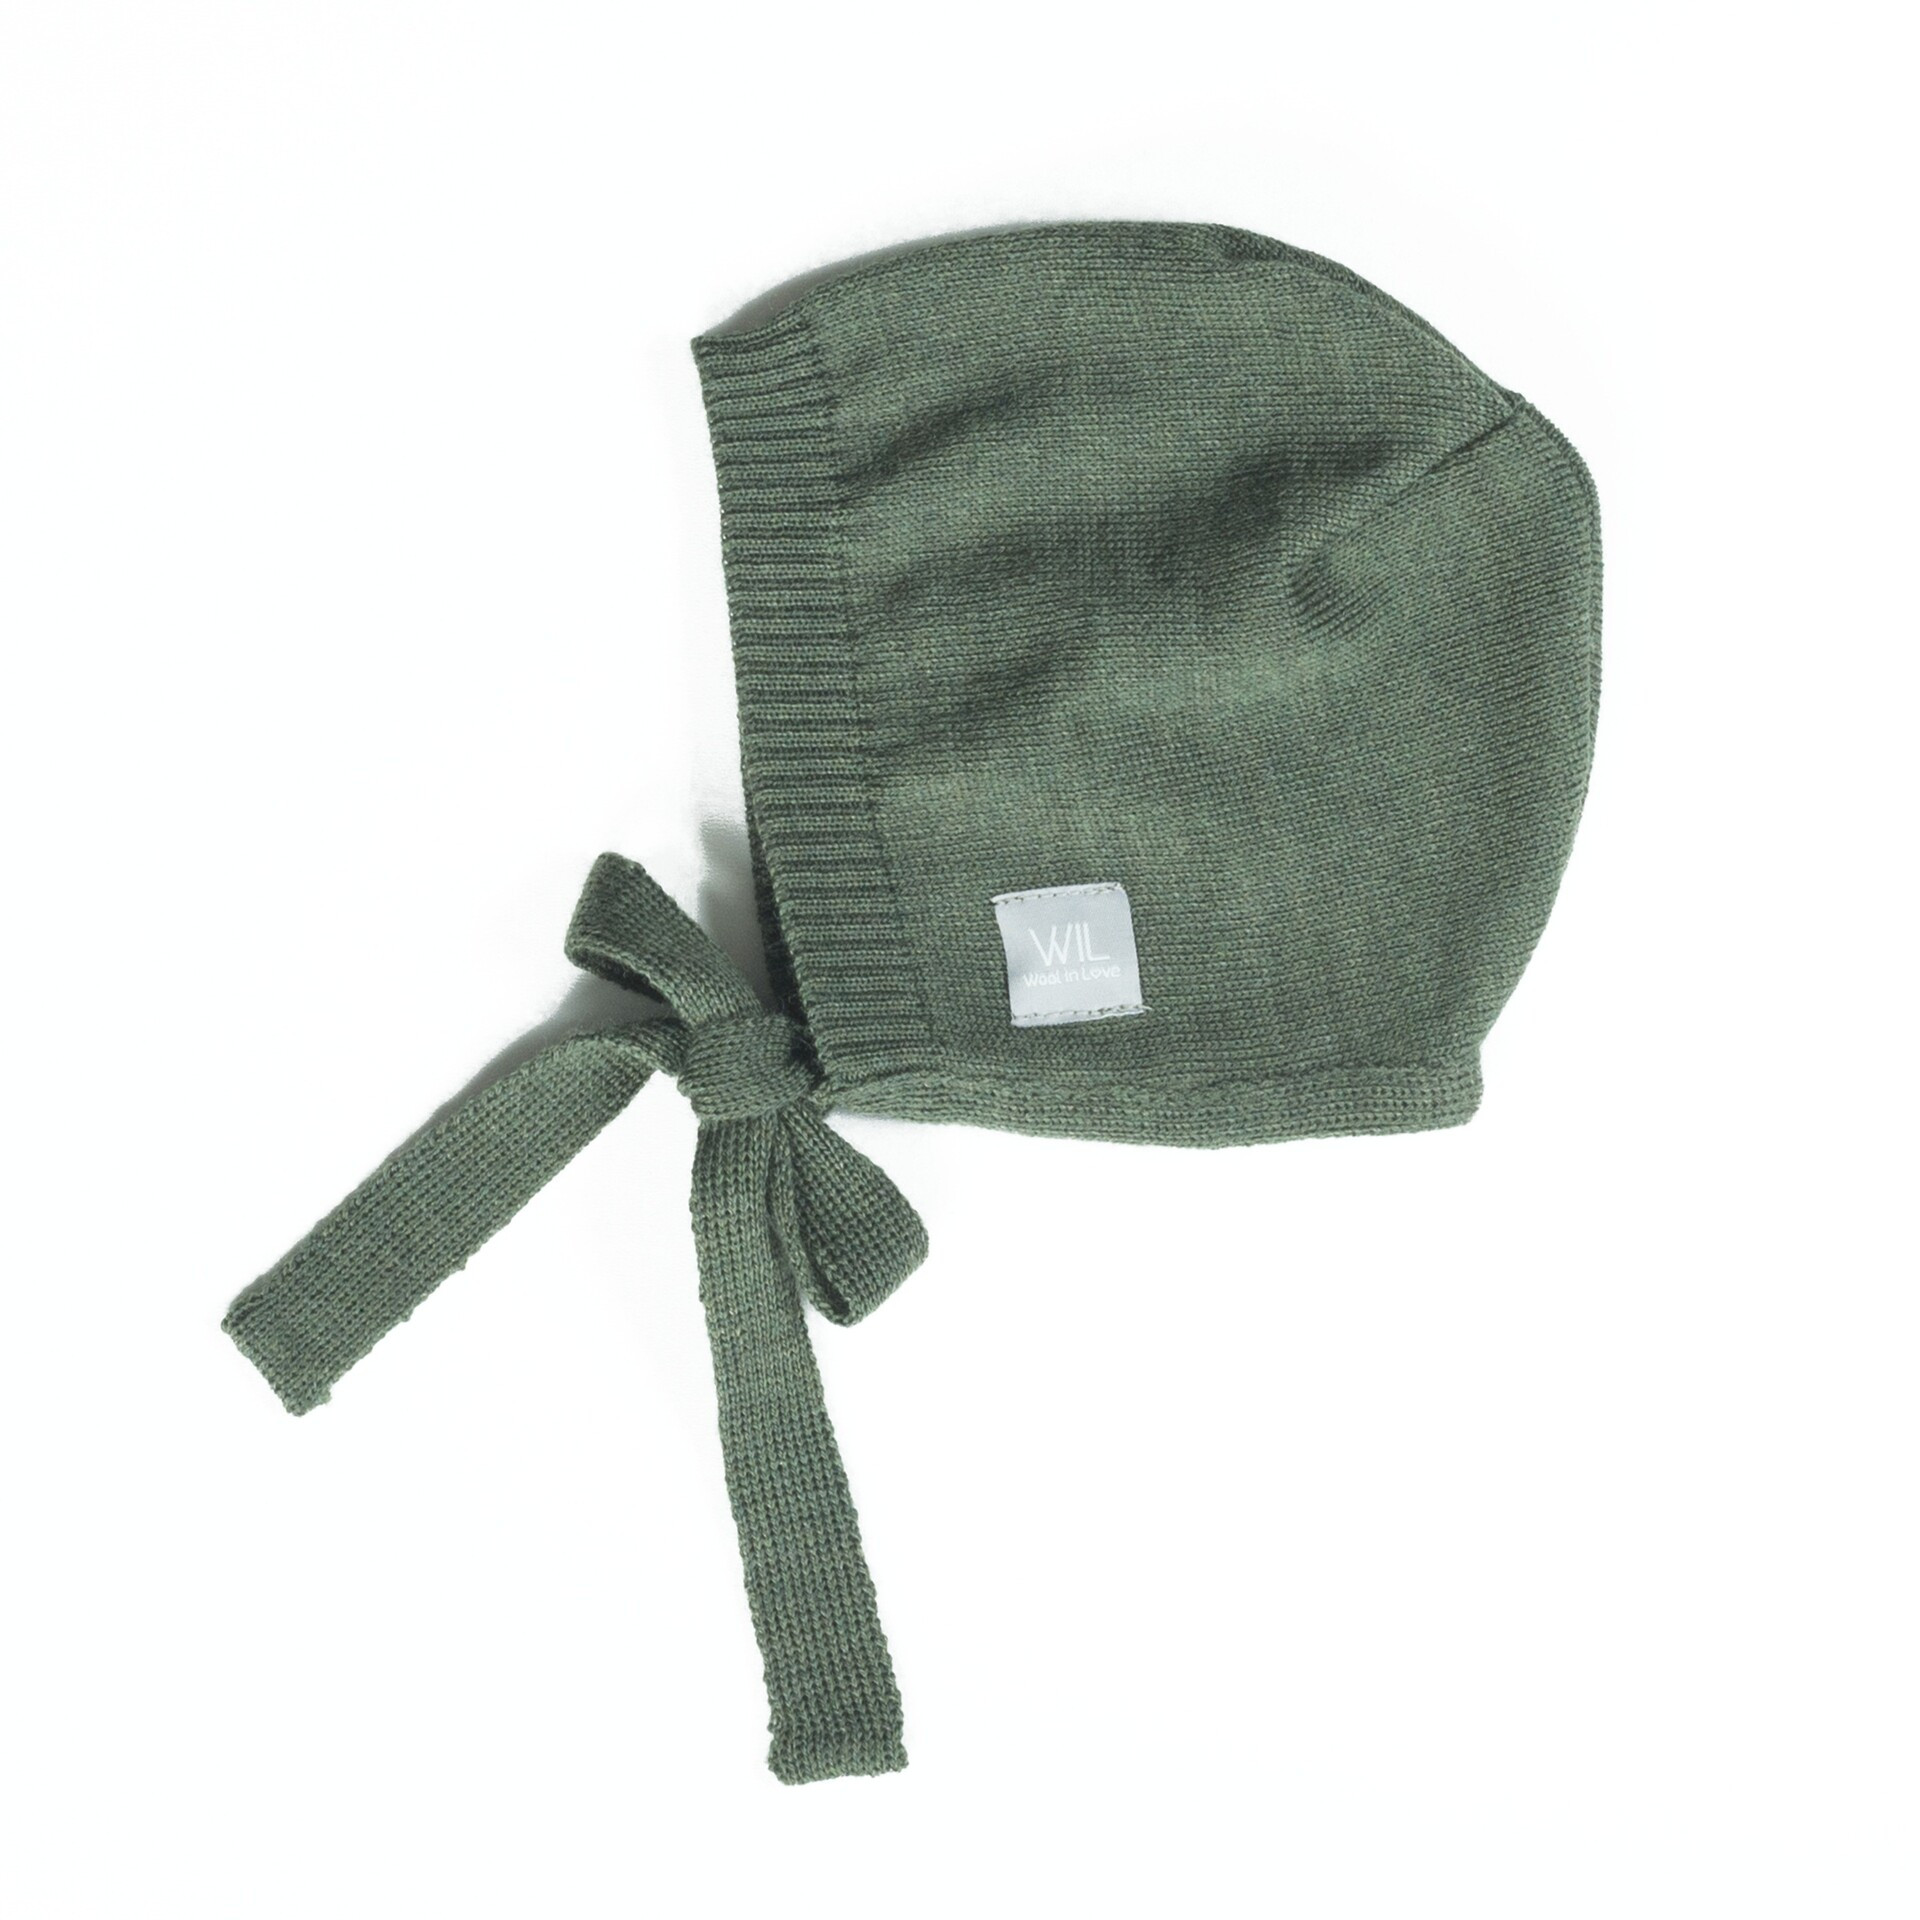 Merino wool Baby Bonnet hat for newborn